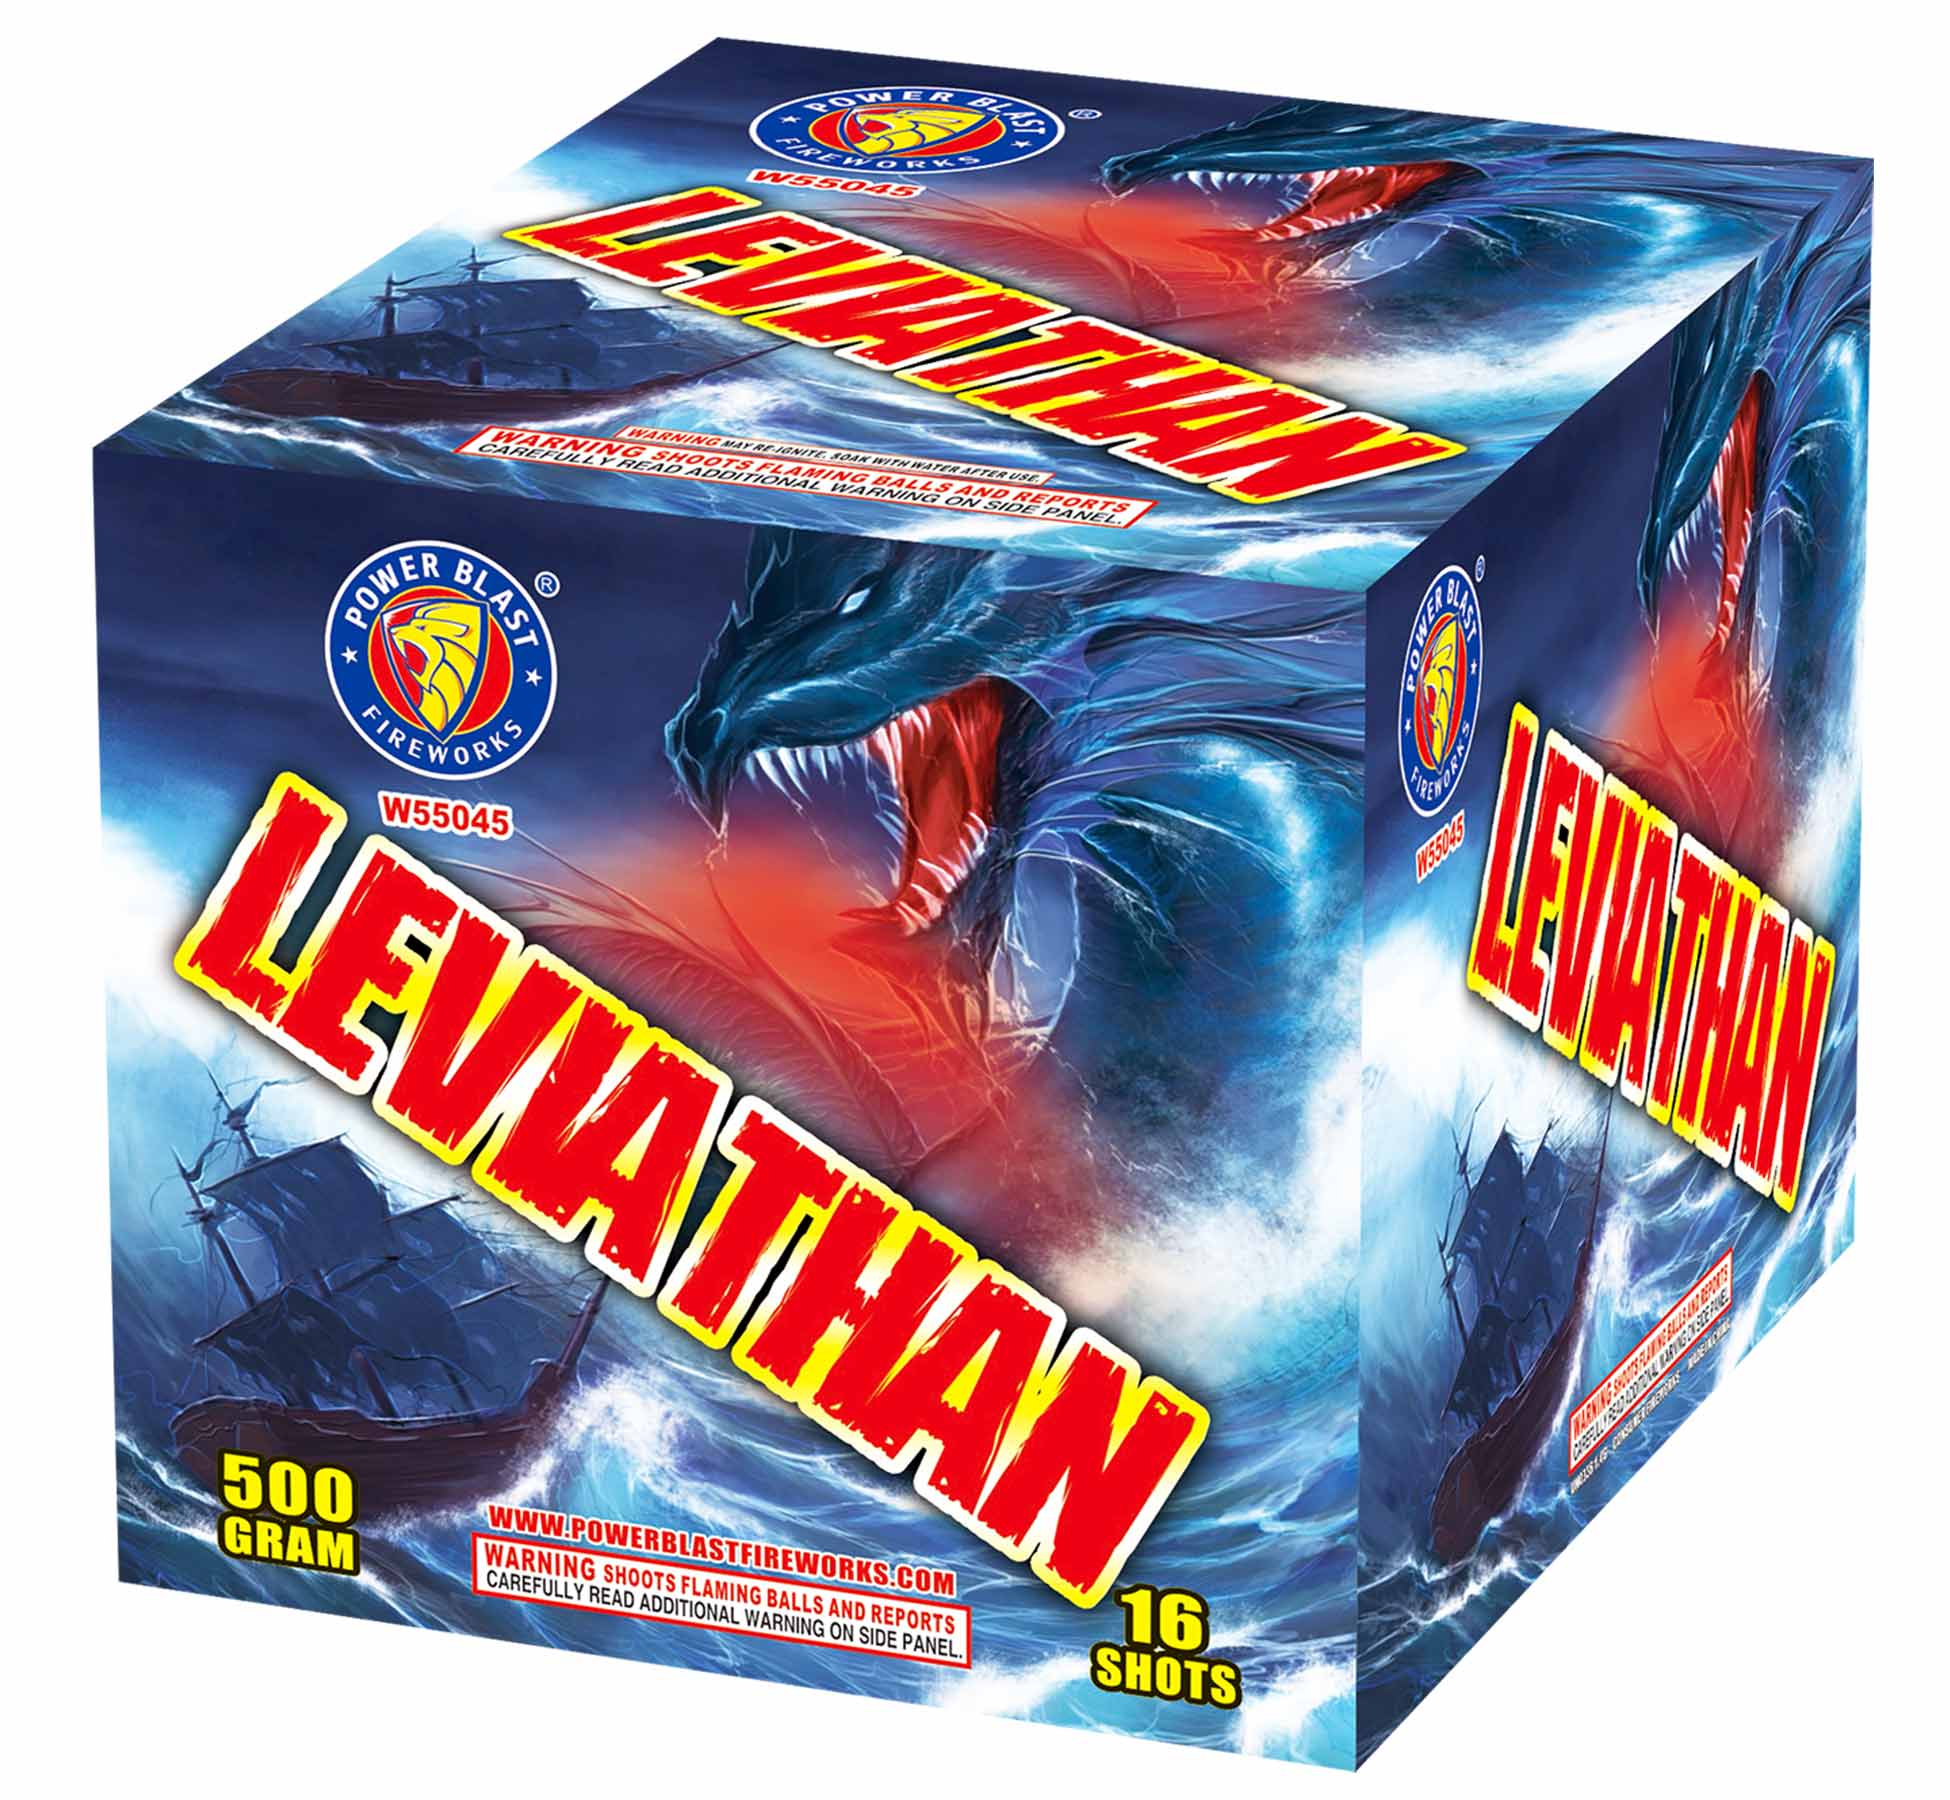 W55045 Leviathan